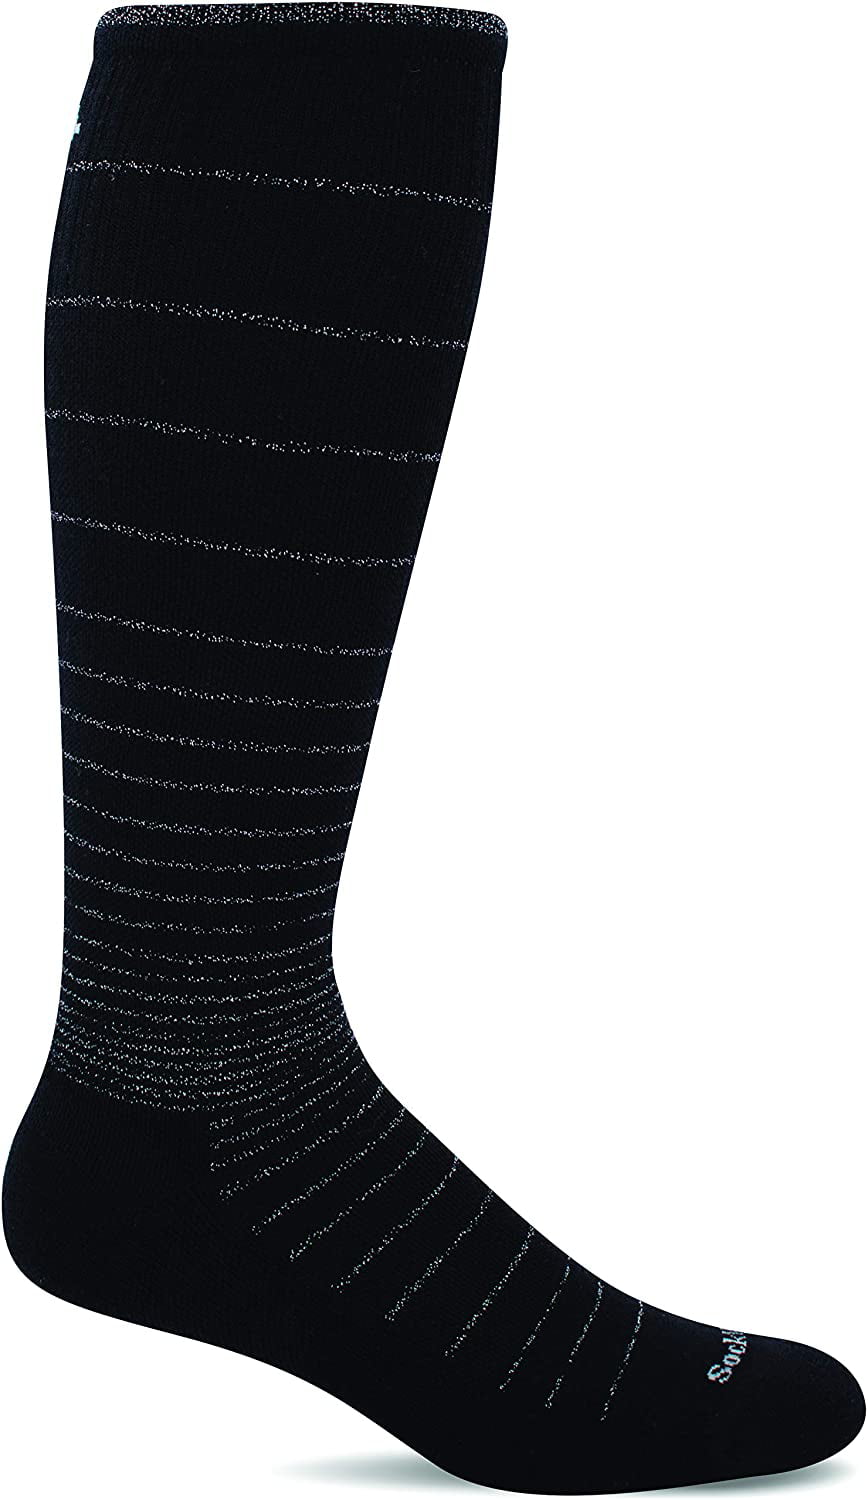 Sockwell Women's Full Stripe Moderate Graduated Compression Sock Black S/M 